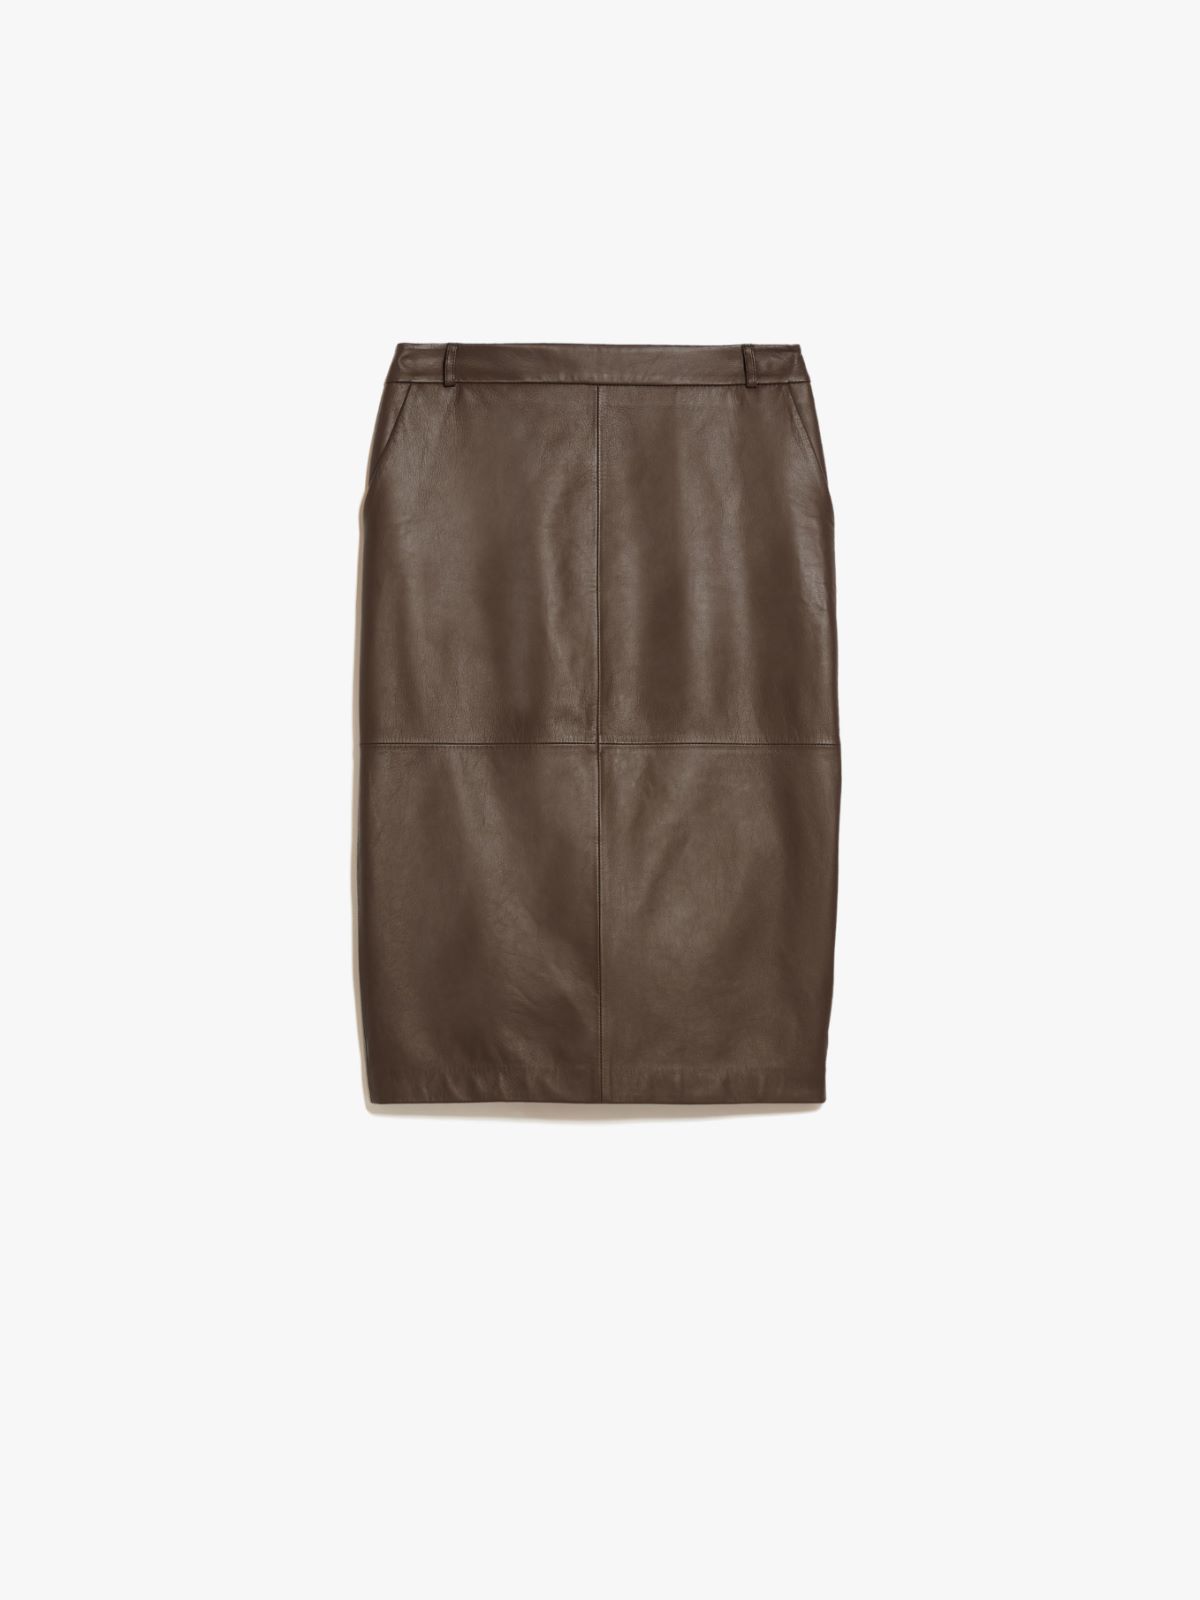 Nappa leather pencil skirt - CHOCOLATE - Weekend Max Mara - 5